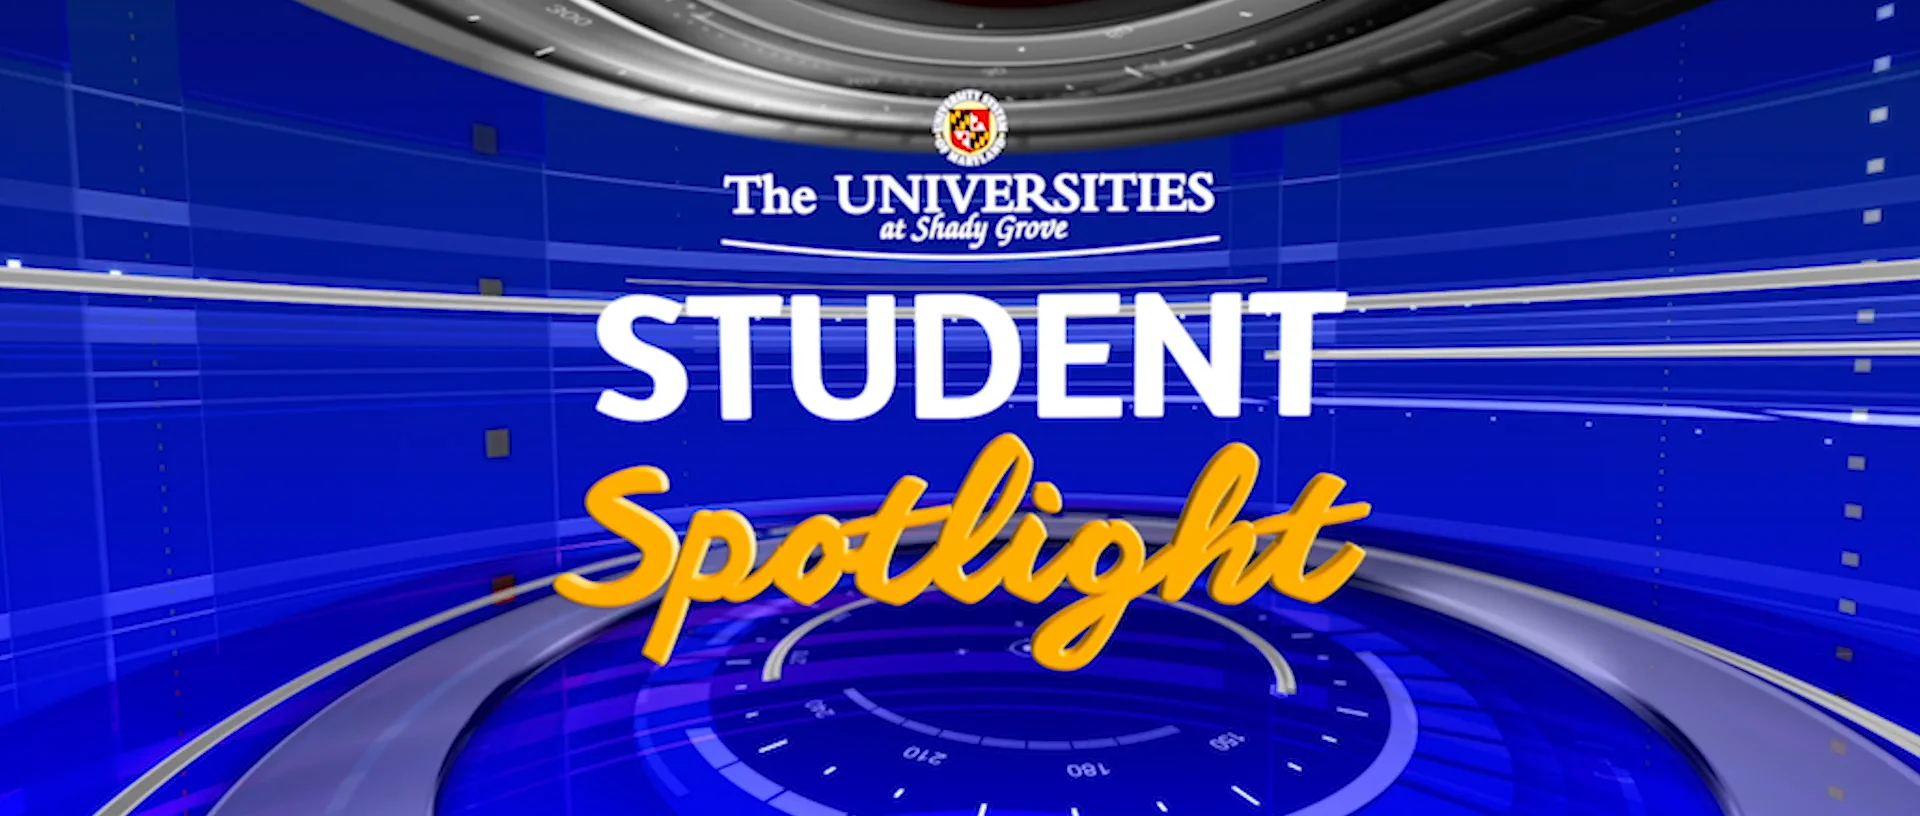 Student Spotlight May 2017 — Graduate School